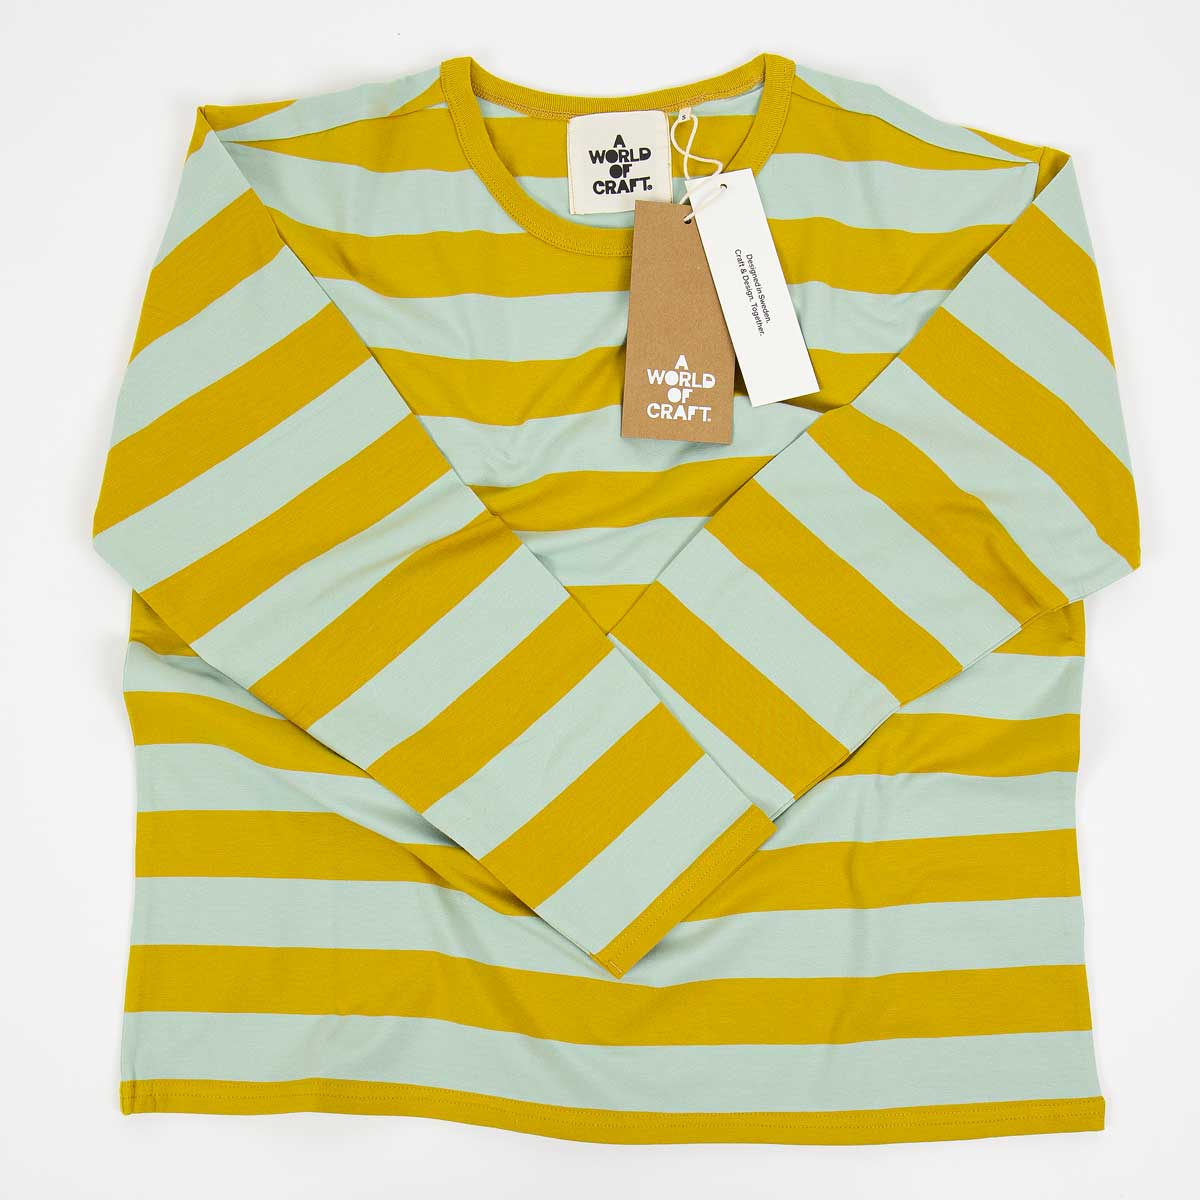 AWOC Woman T-shirt, long sleeve, mustard/turquoise